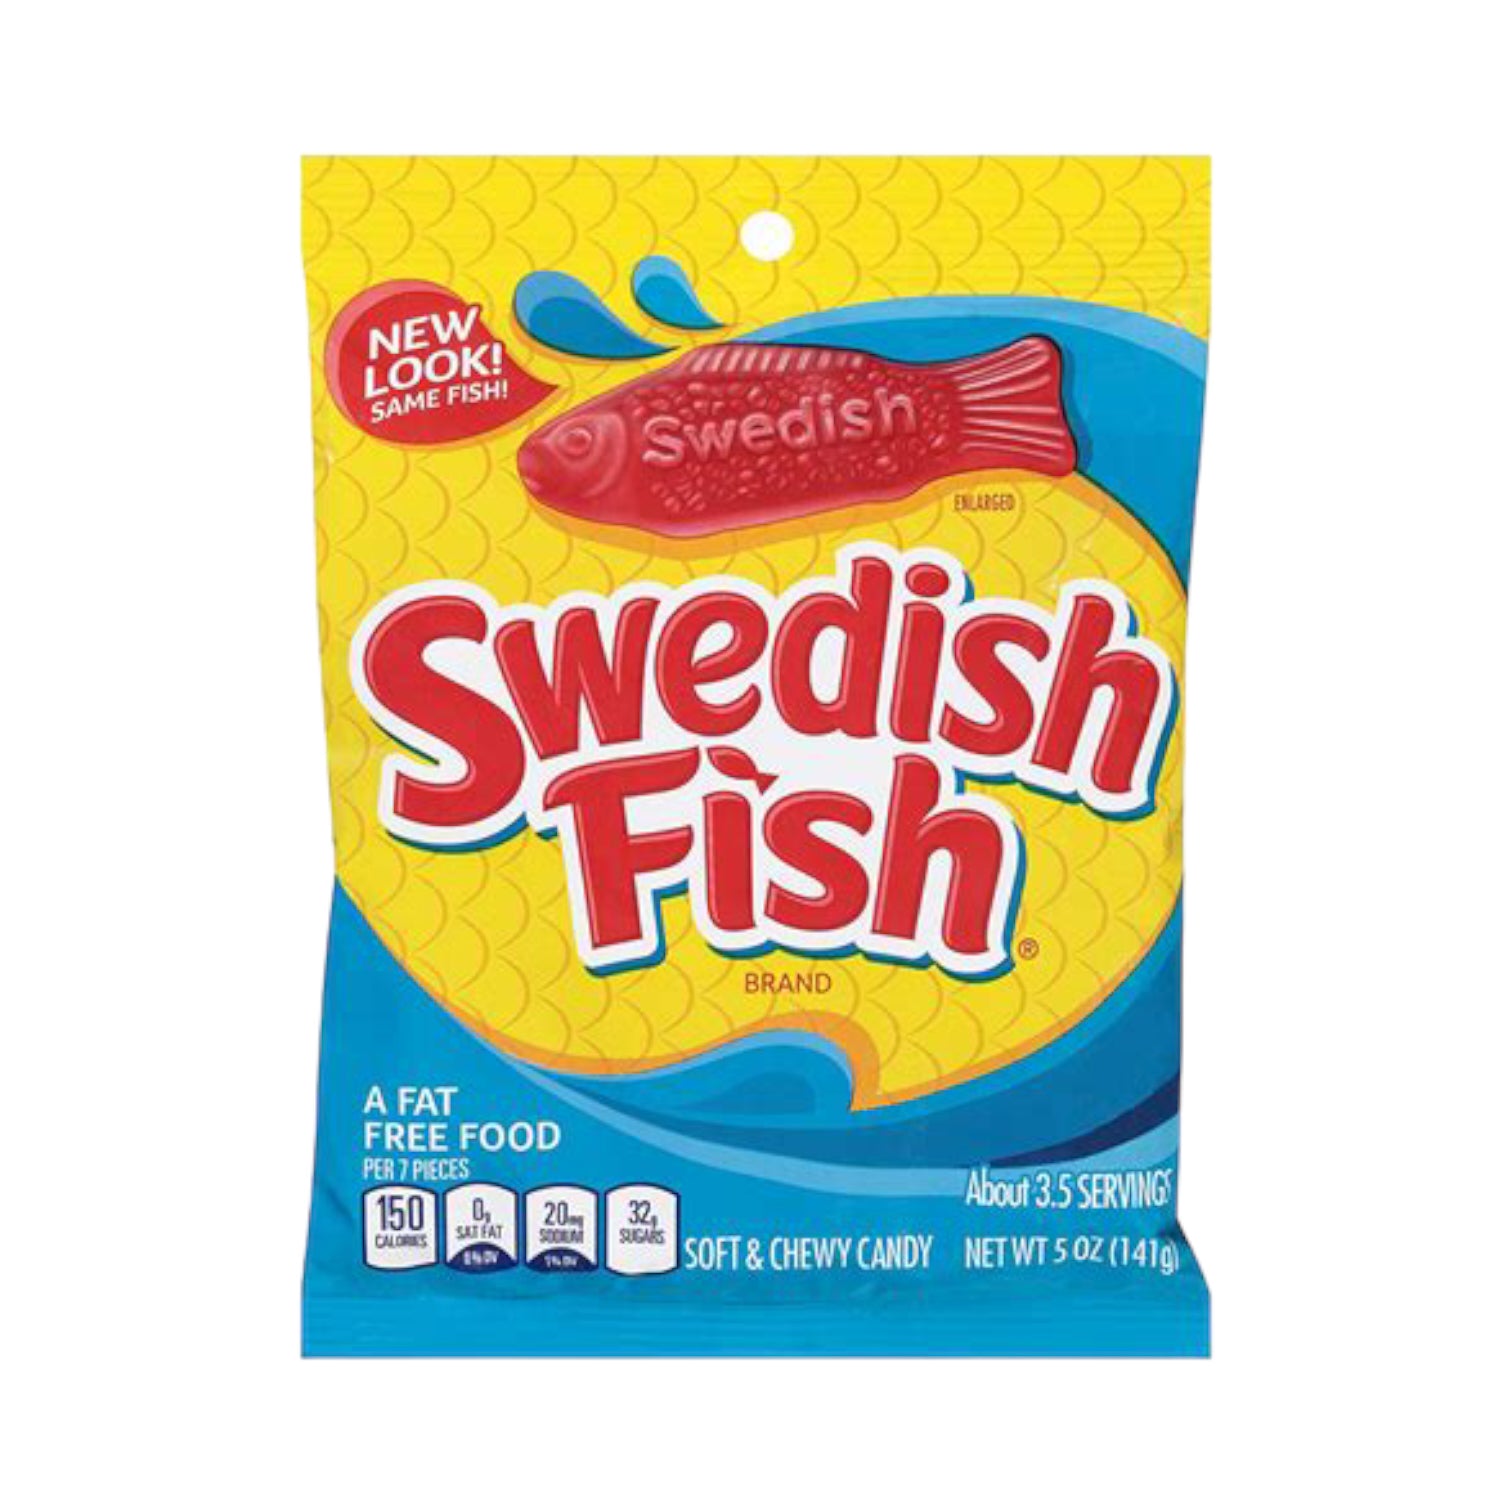 Swedish Fish Blue Raspberry Lemonade – Candy Paradise